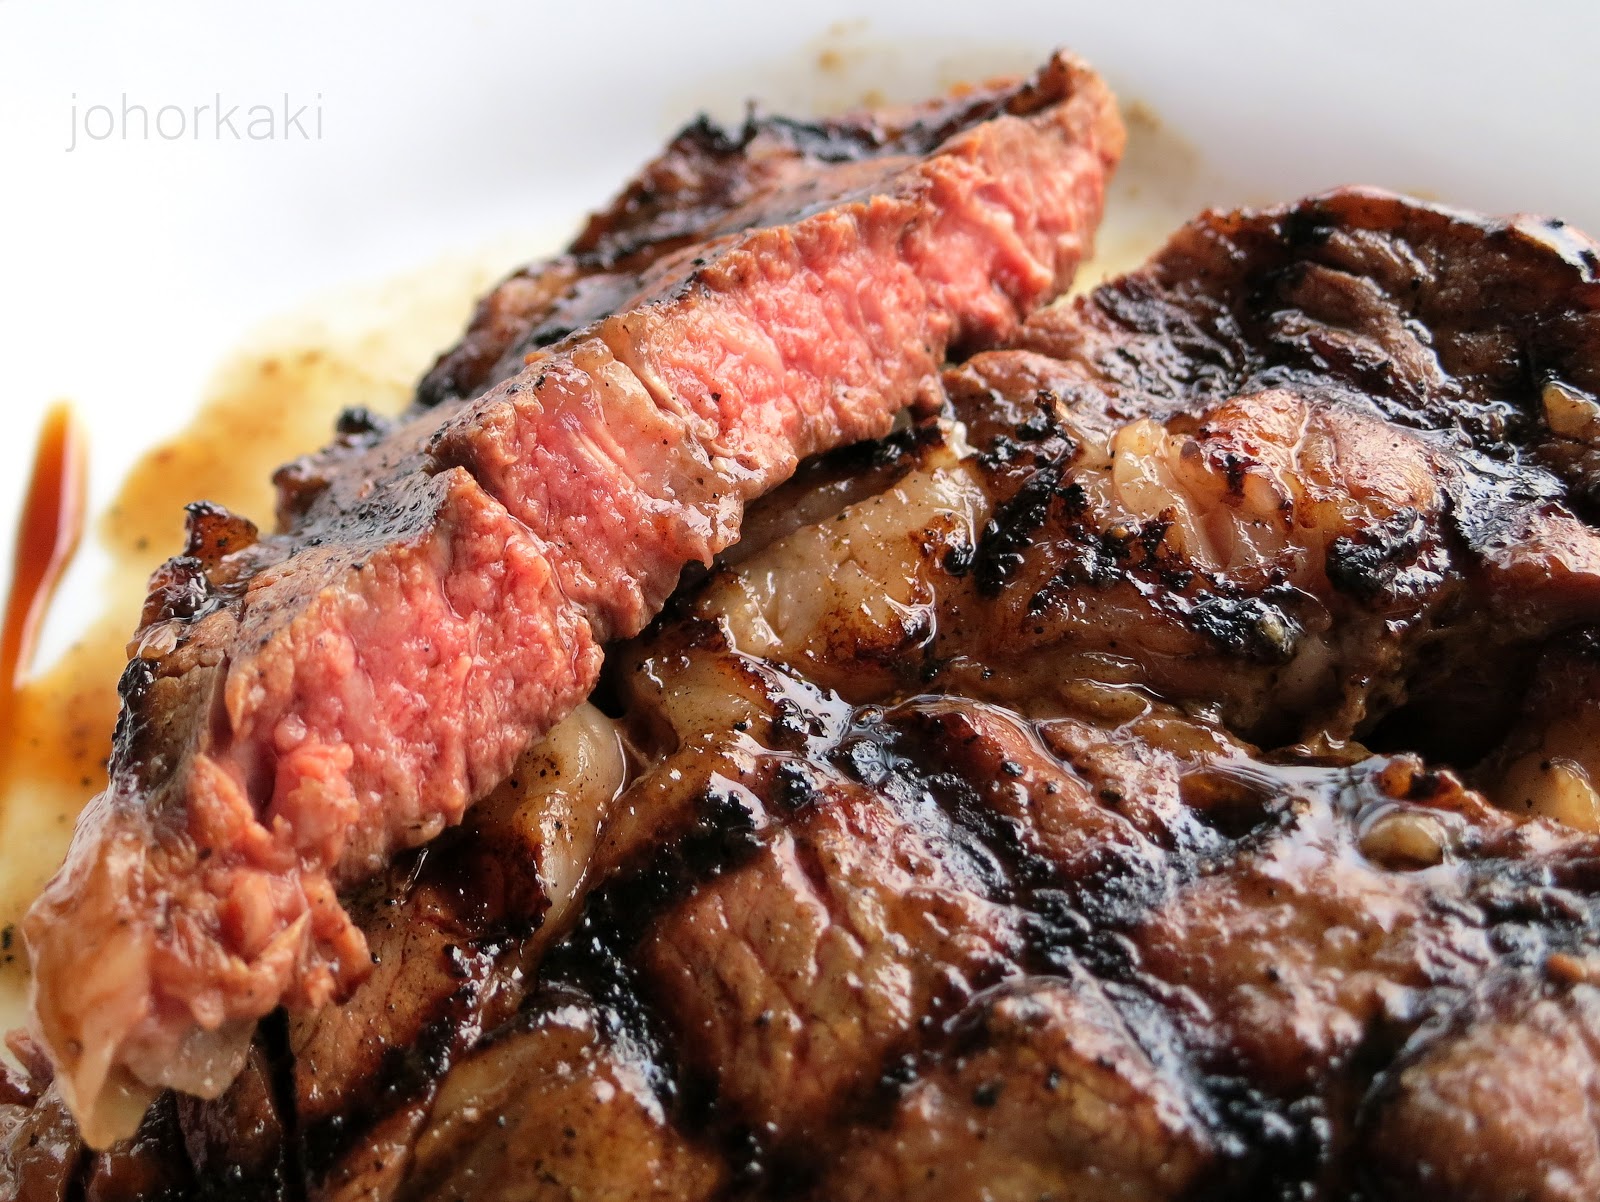 Best Steaks in Johor Bahru at Lazio by Danga Bay |Johor Kaki Travels